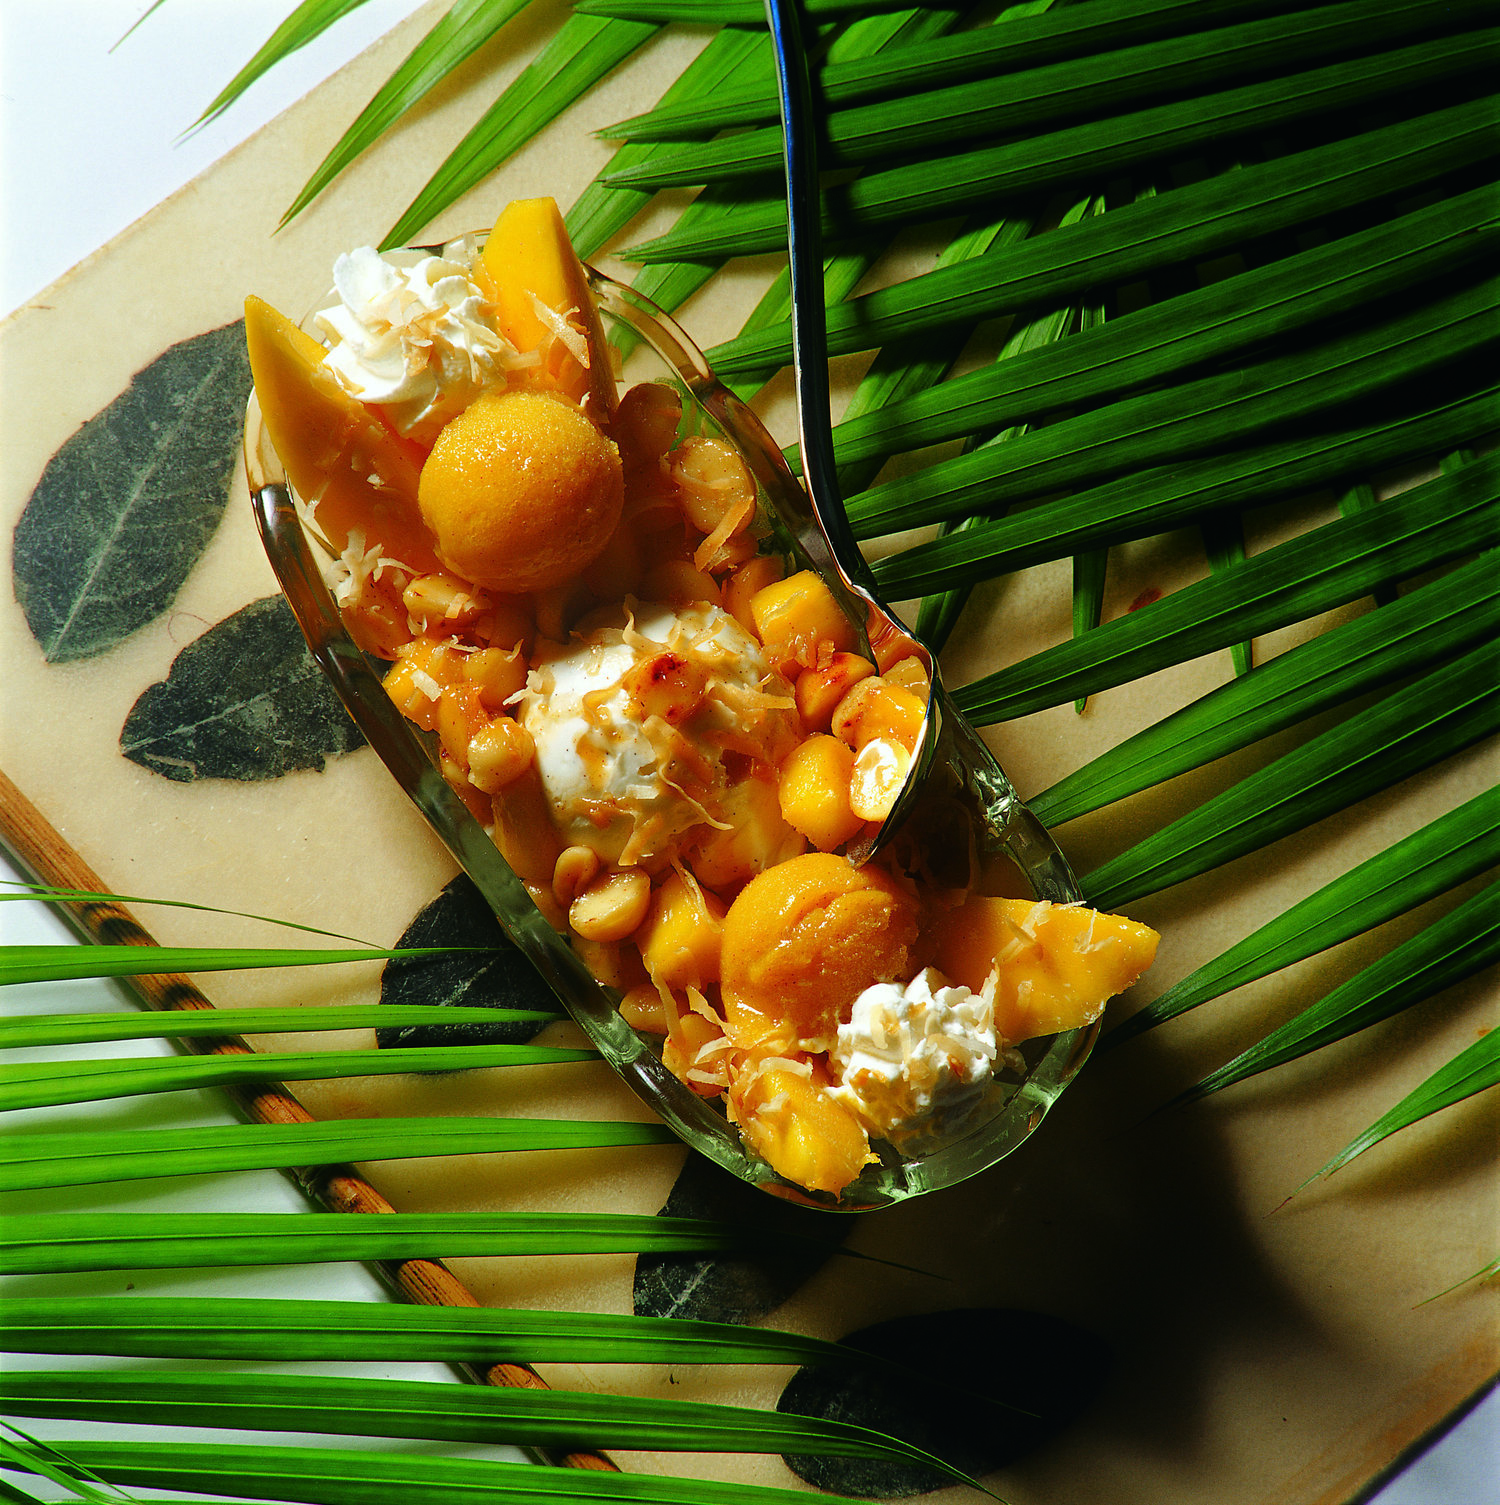 Mango Split with Rum-Caramel Sauce and Macadamia Nuts